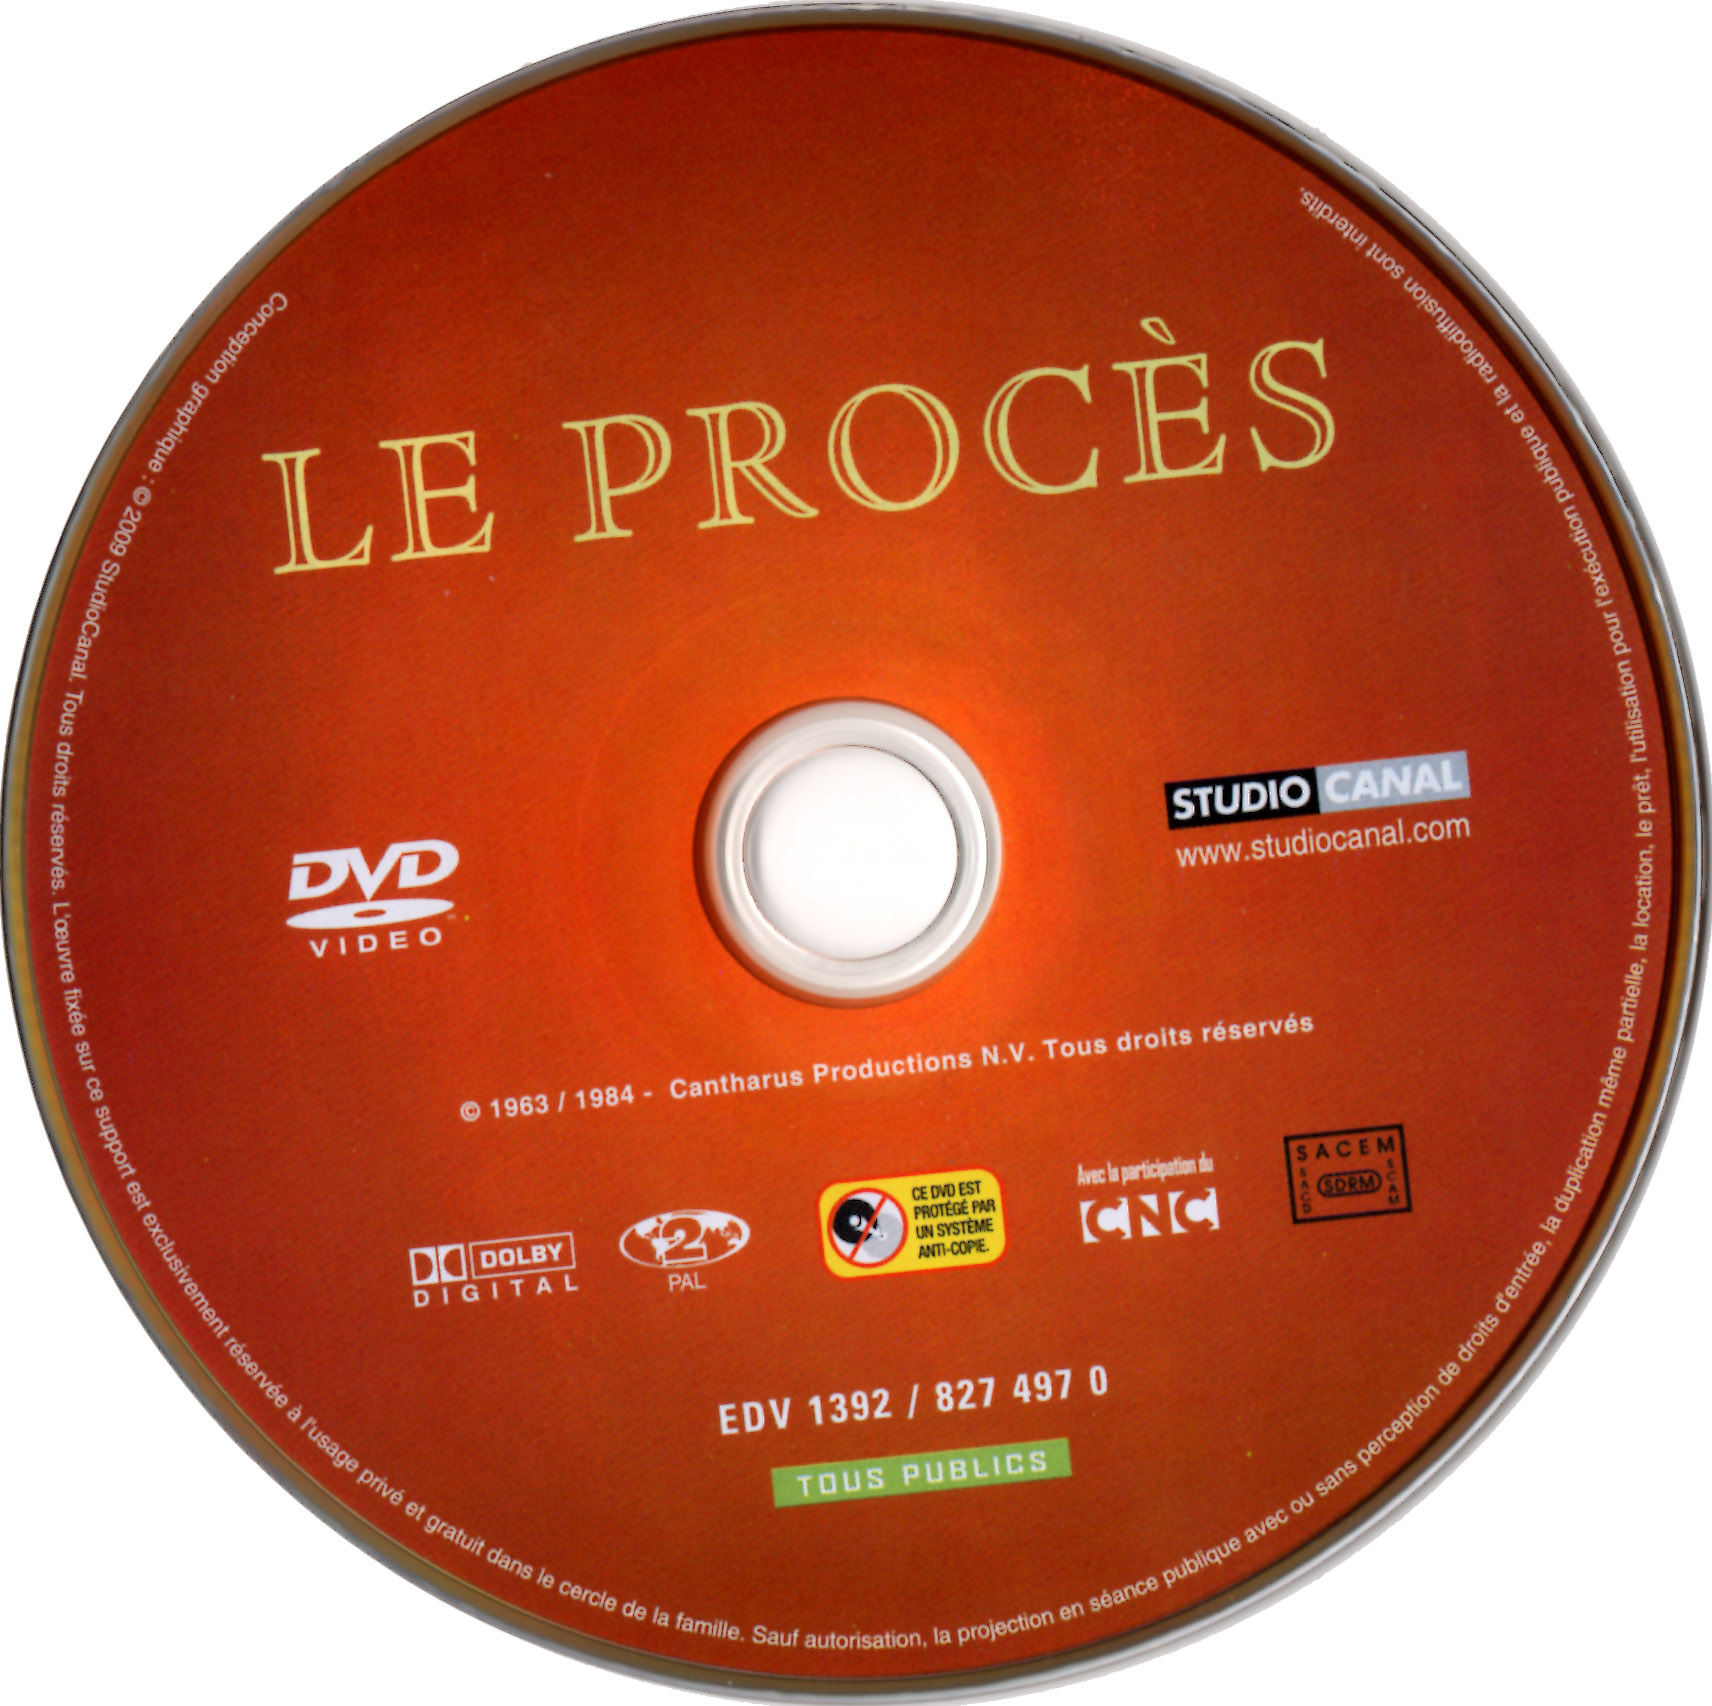 Le procs (1963)